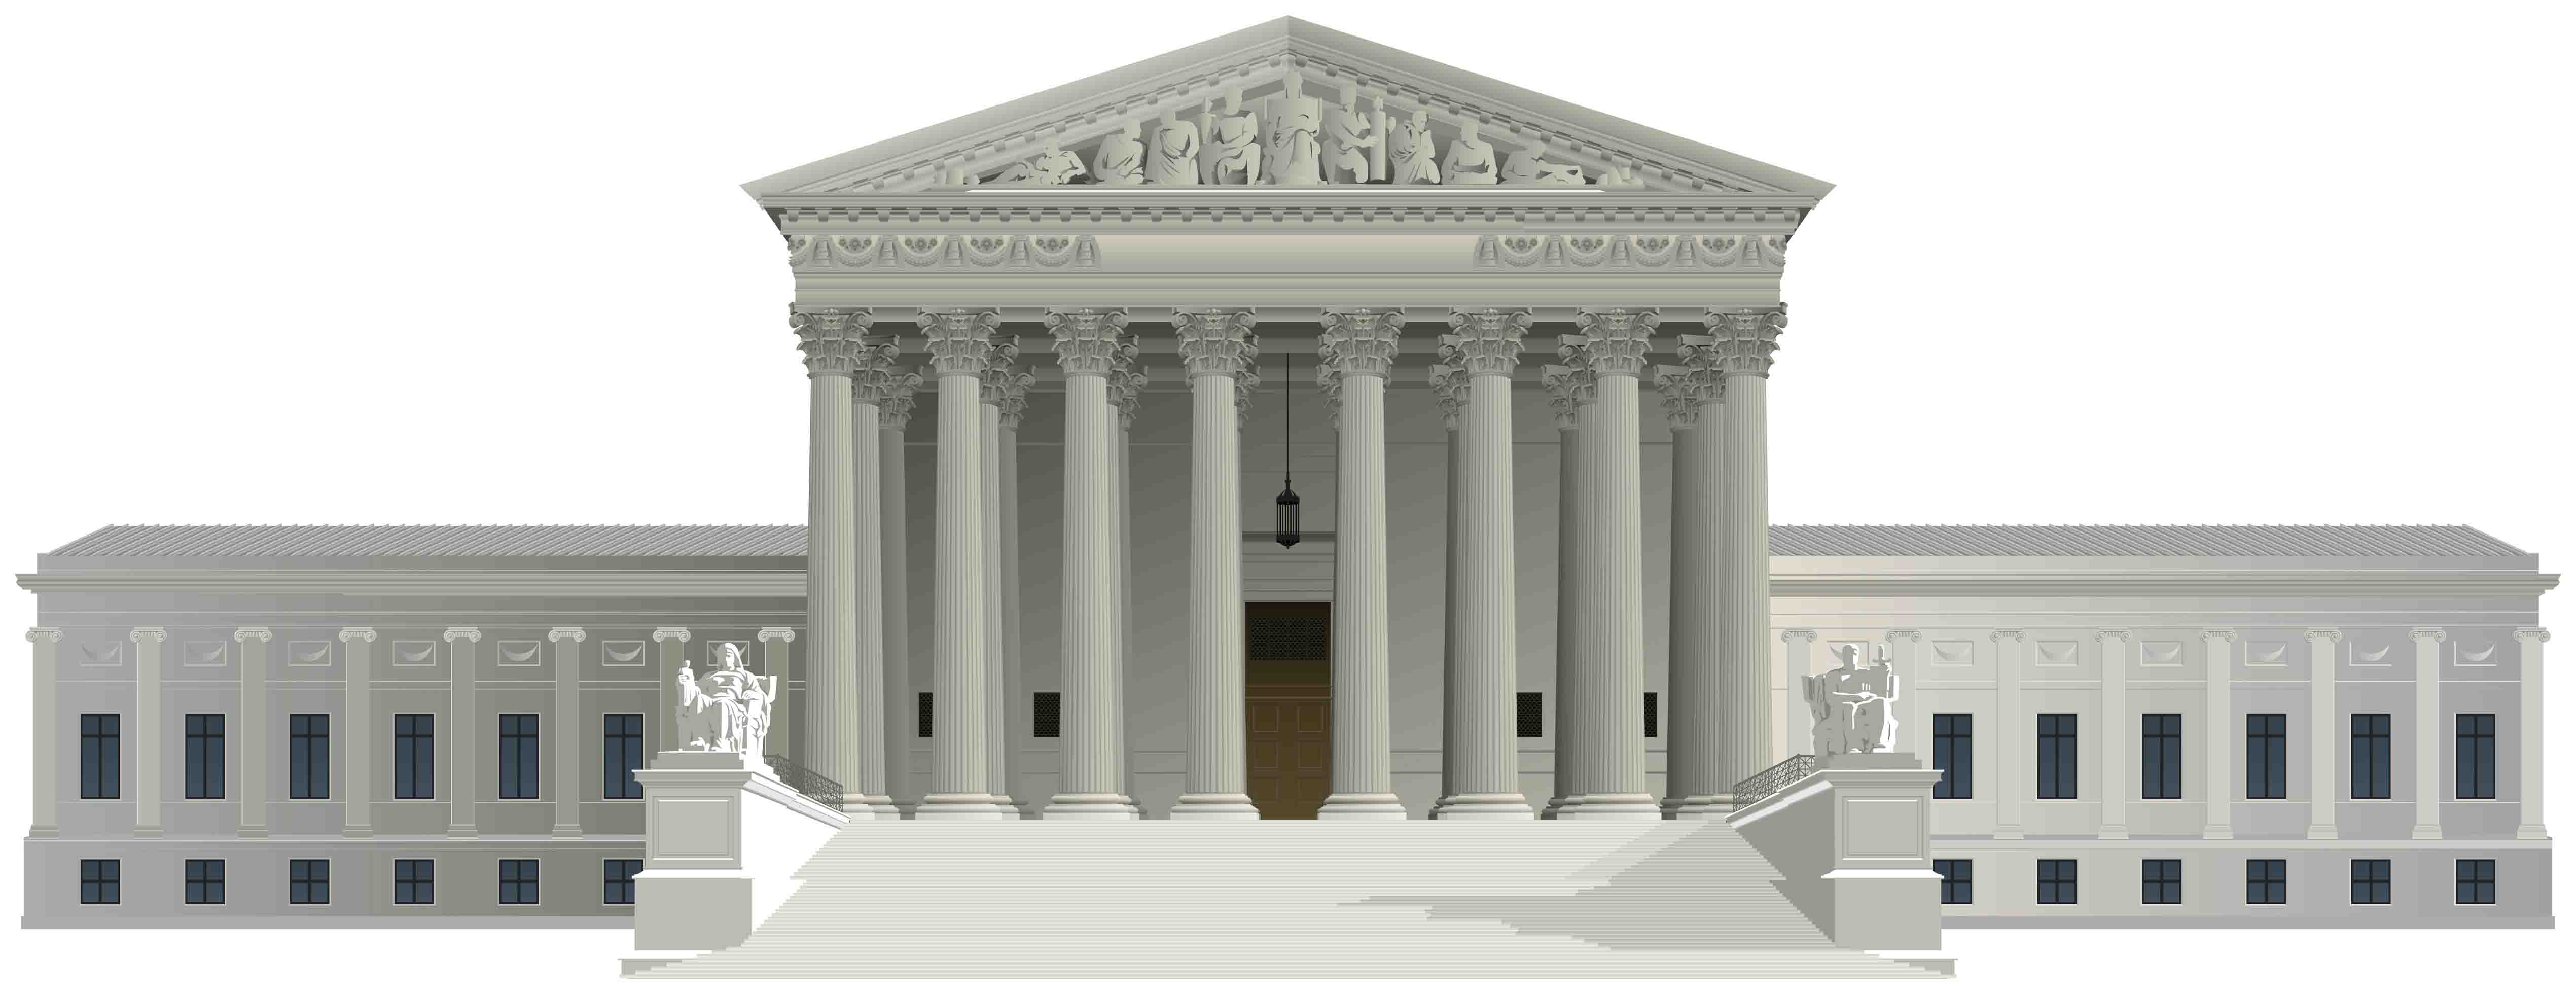 illustration of the supreme court building